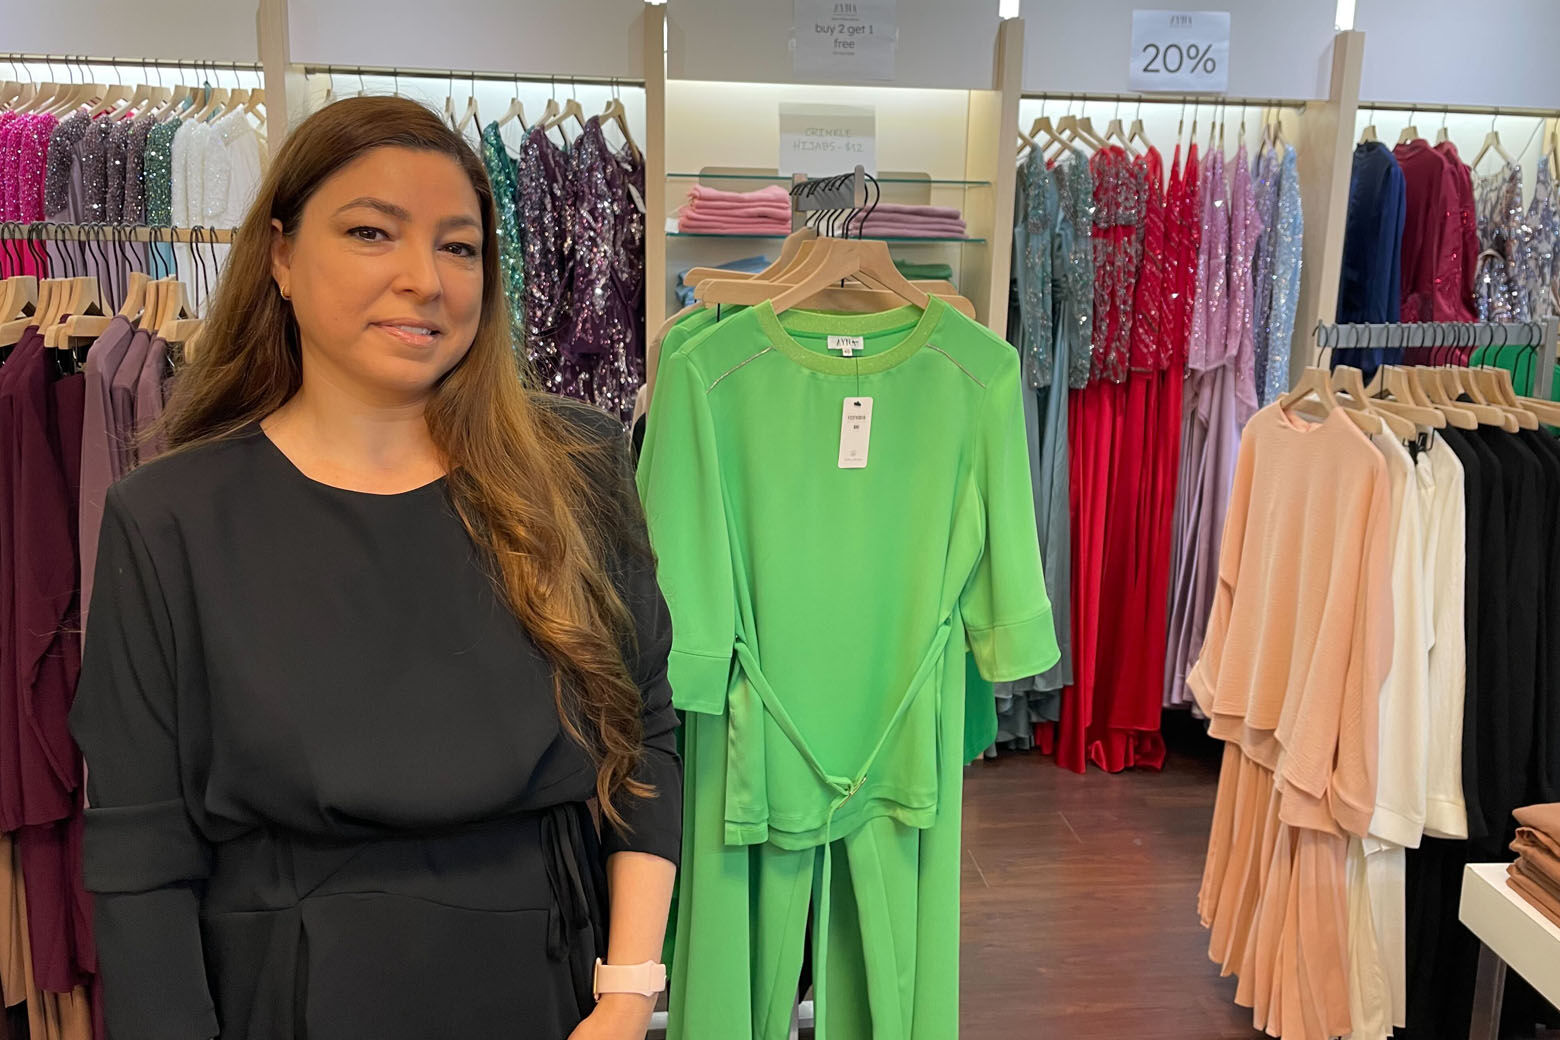 Virginia entrepreneur uncovers niche in women's clothing market: Modest wear  - WTOP News